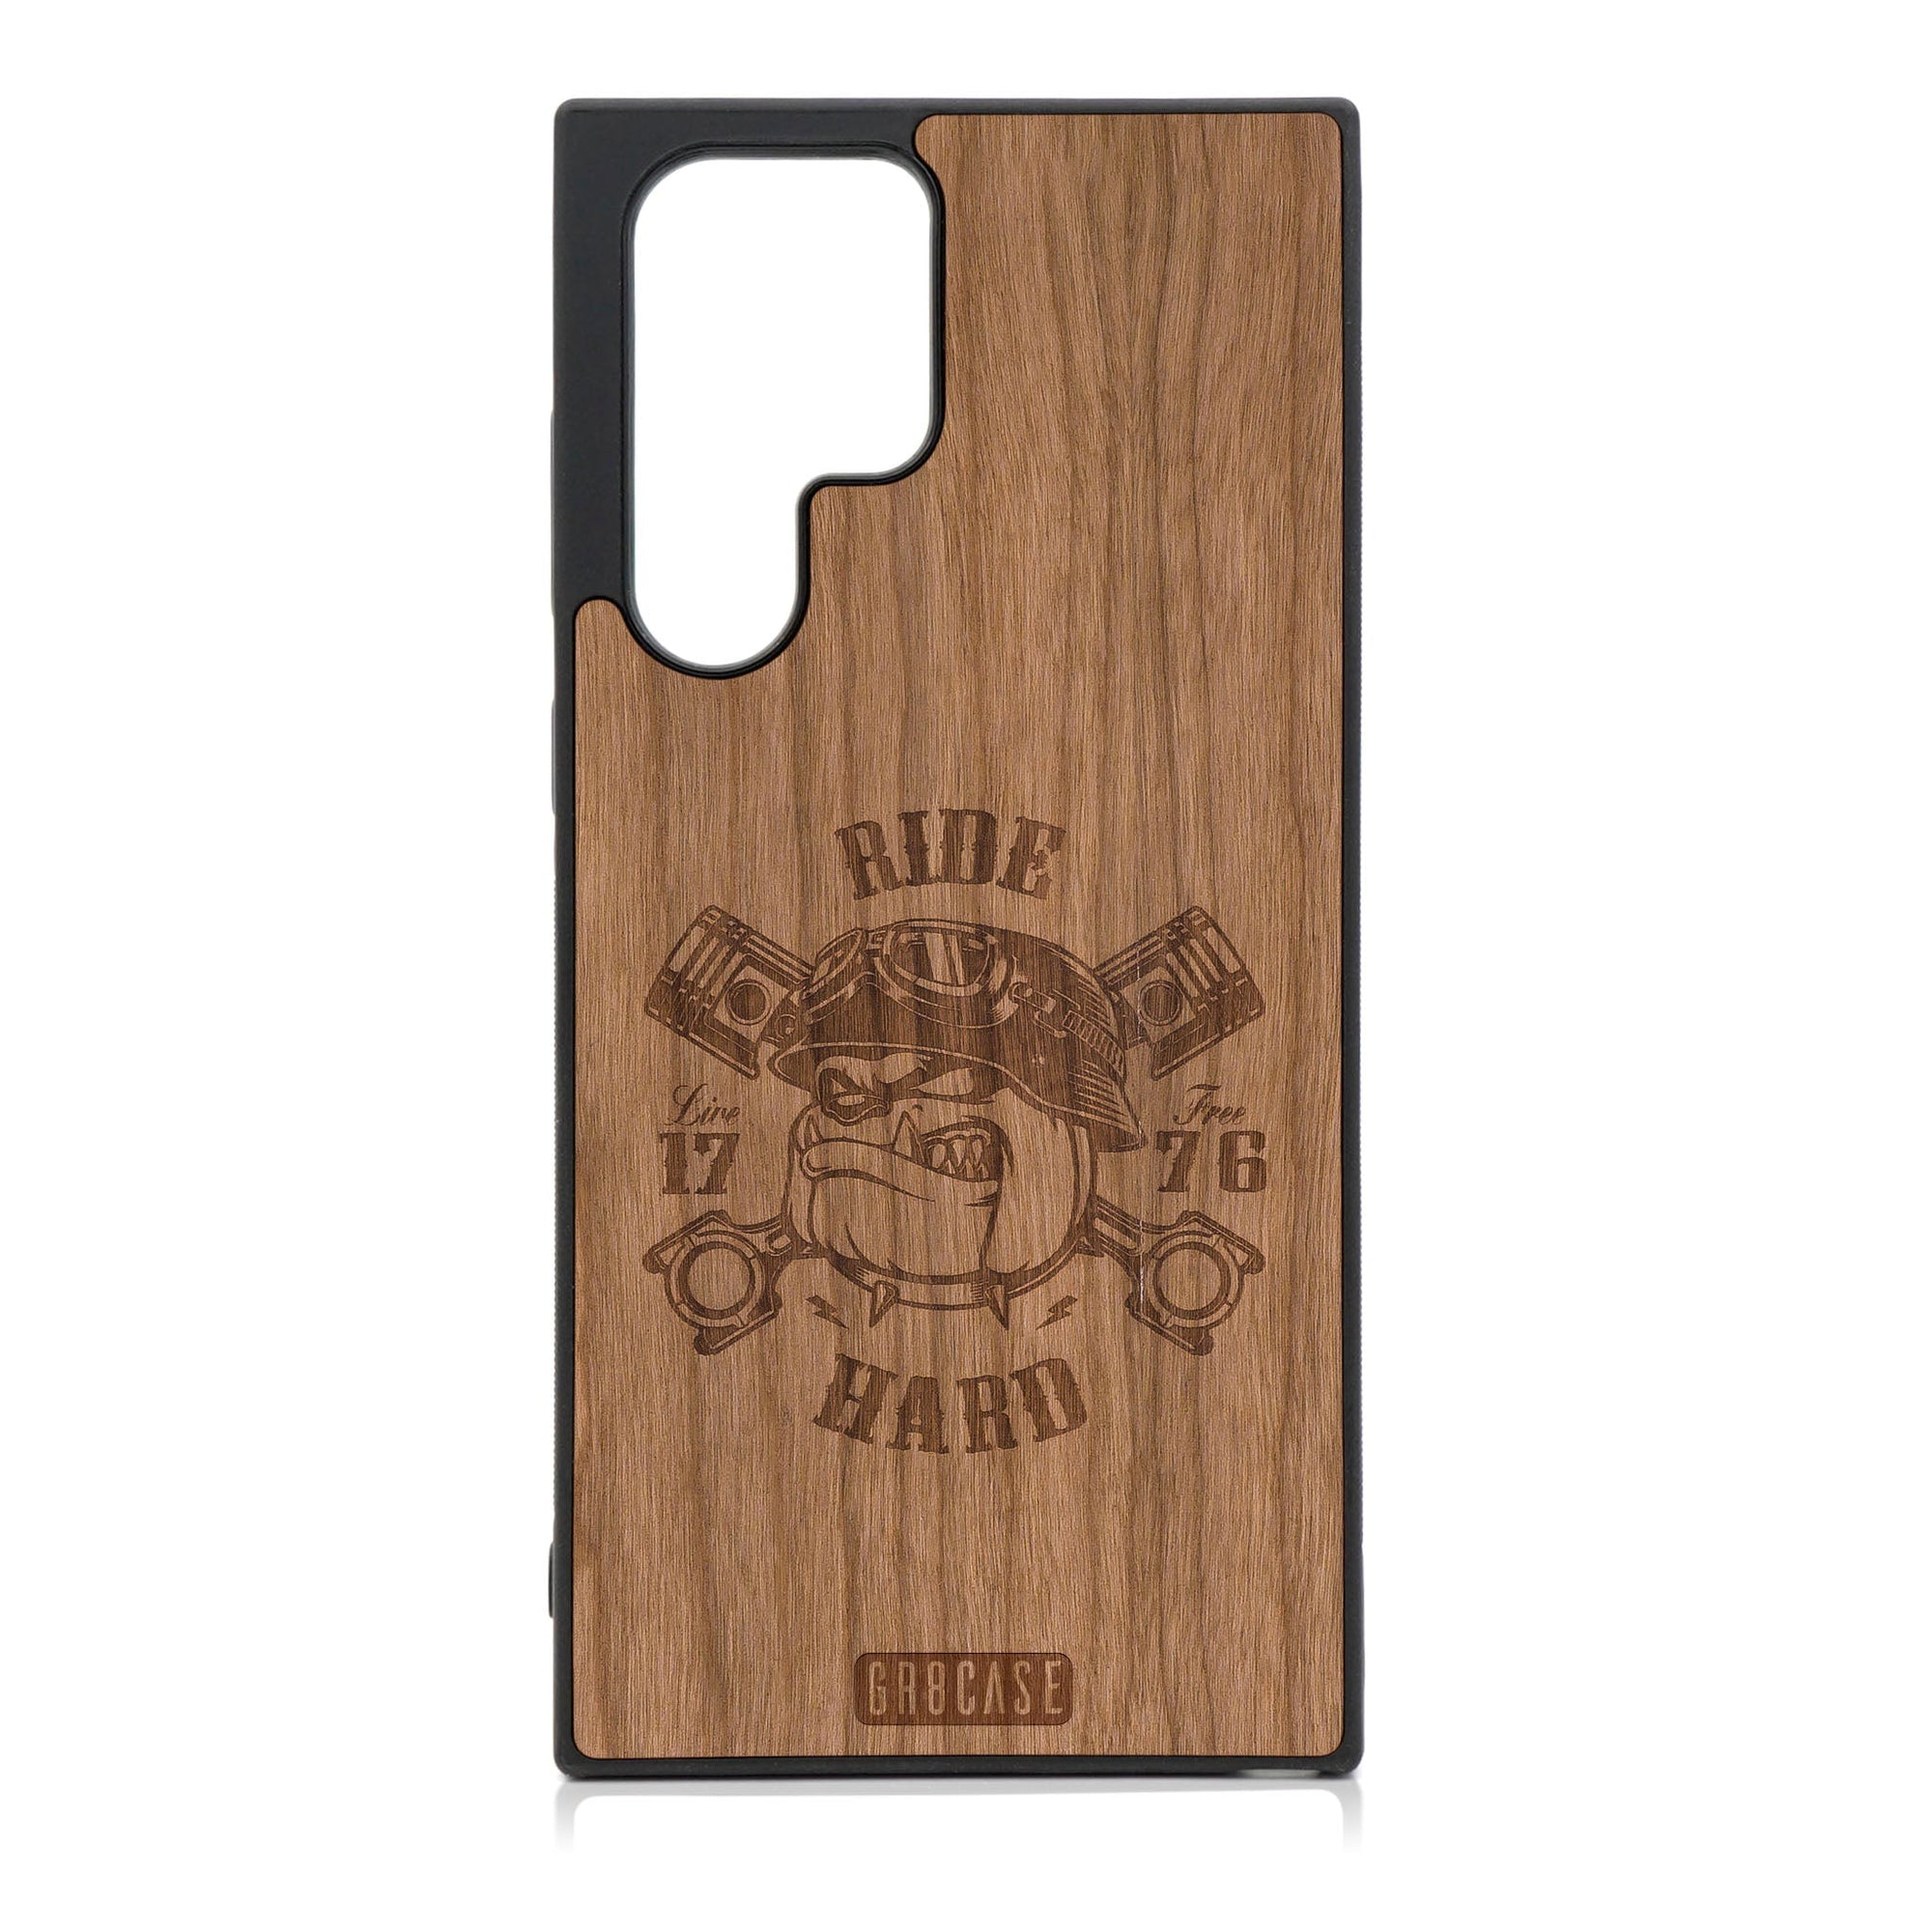 Ride Hard Live Free (Biker Dog) Design Wood Case For Galaxy S23 Ultra